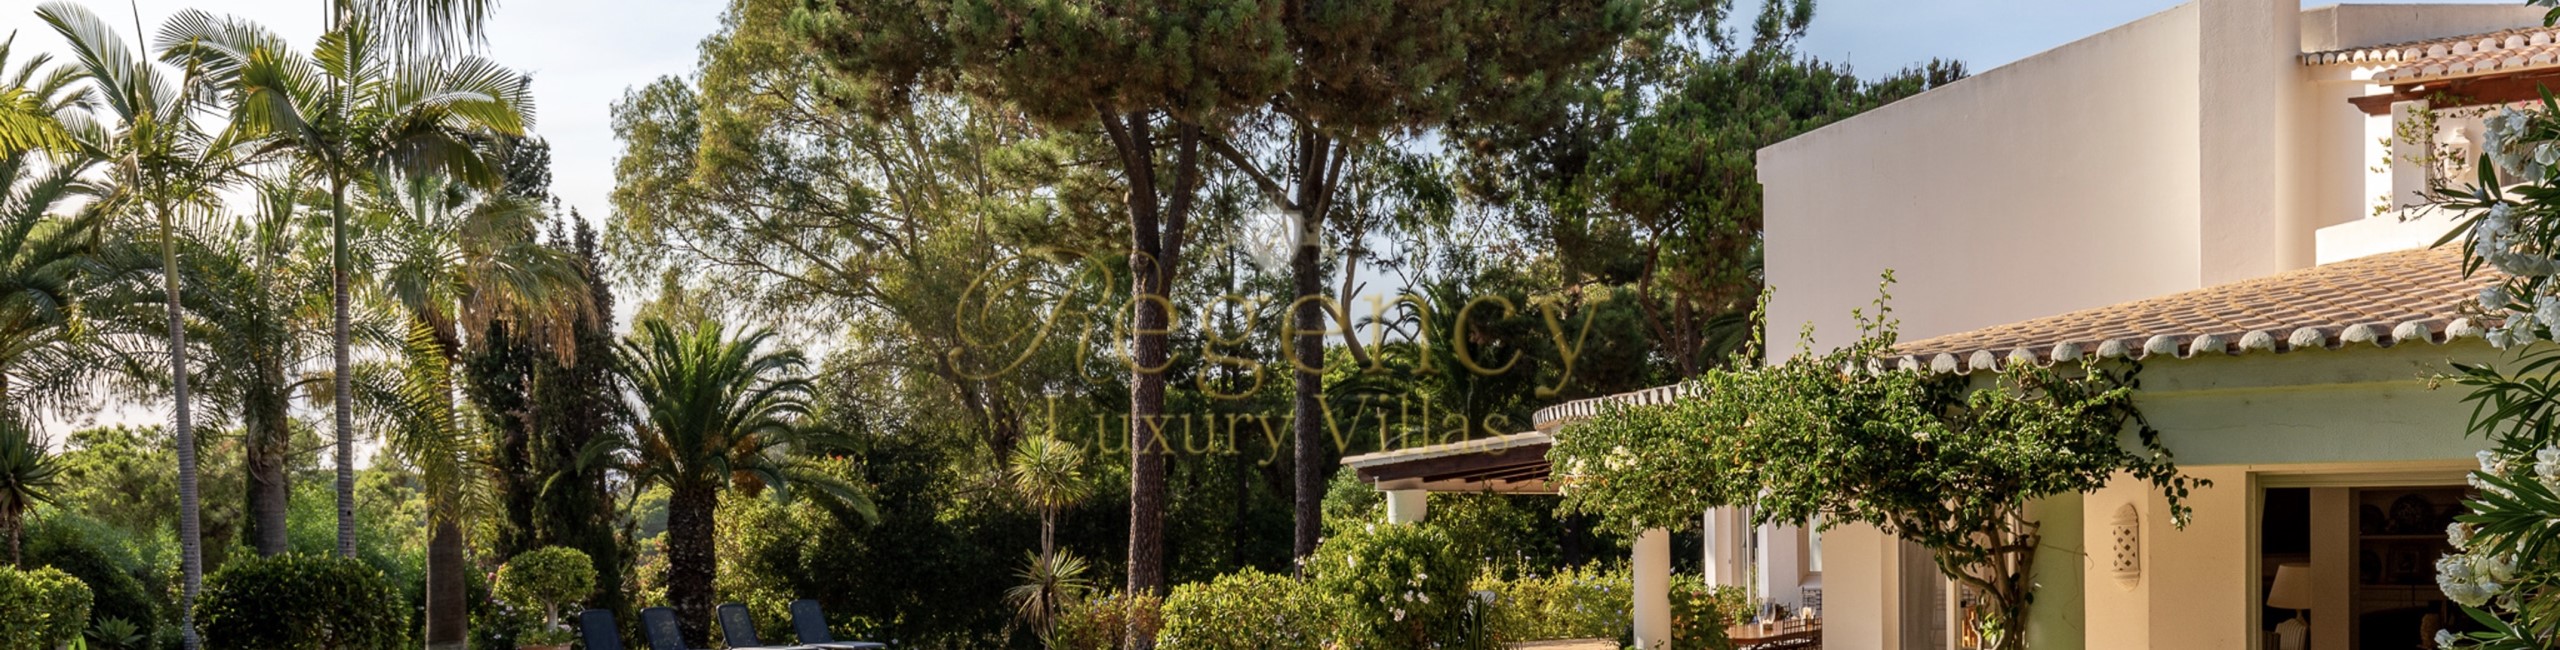 Quinta Do Lago Luxury Villas To Rent Sleep 14 Guests